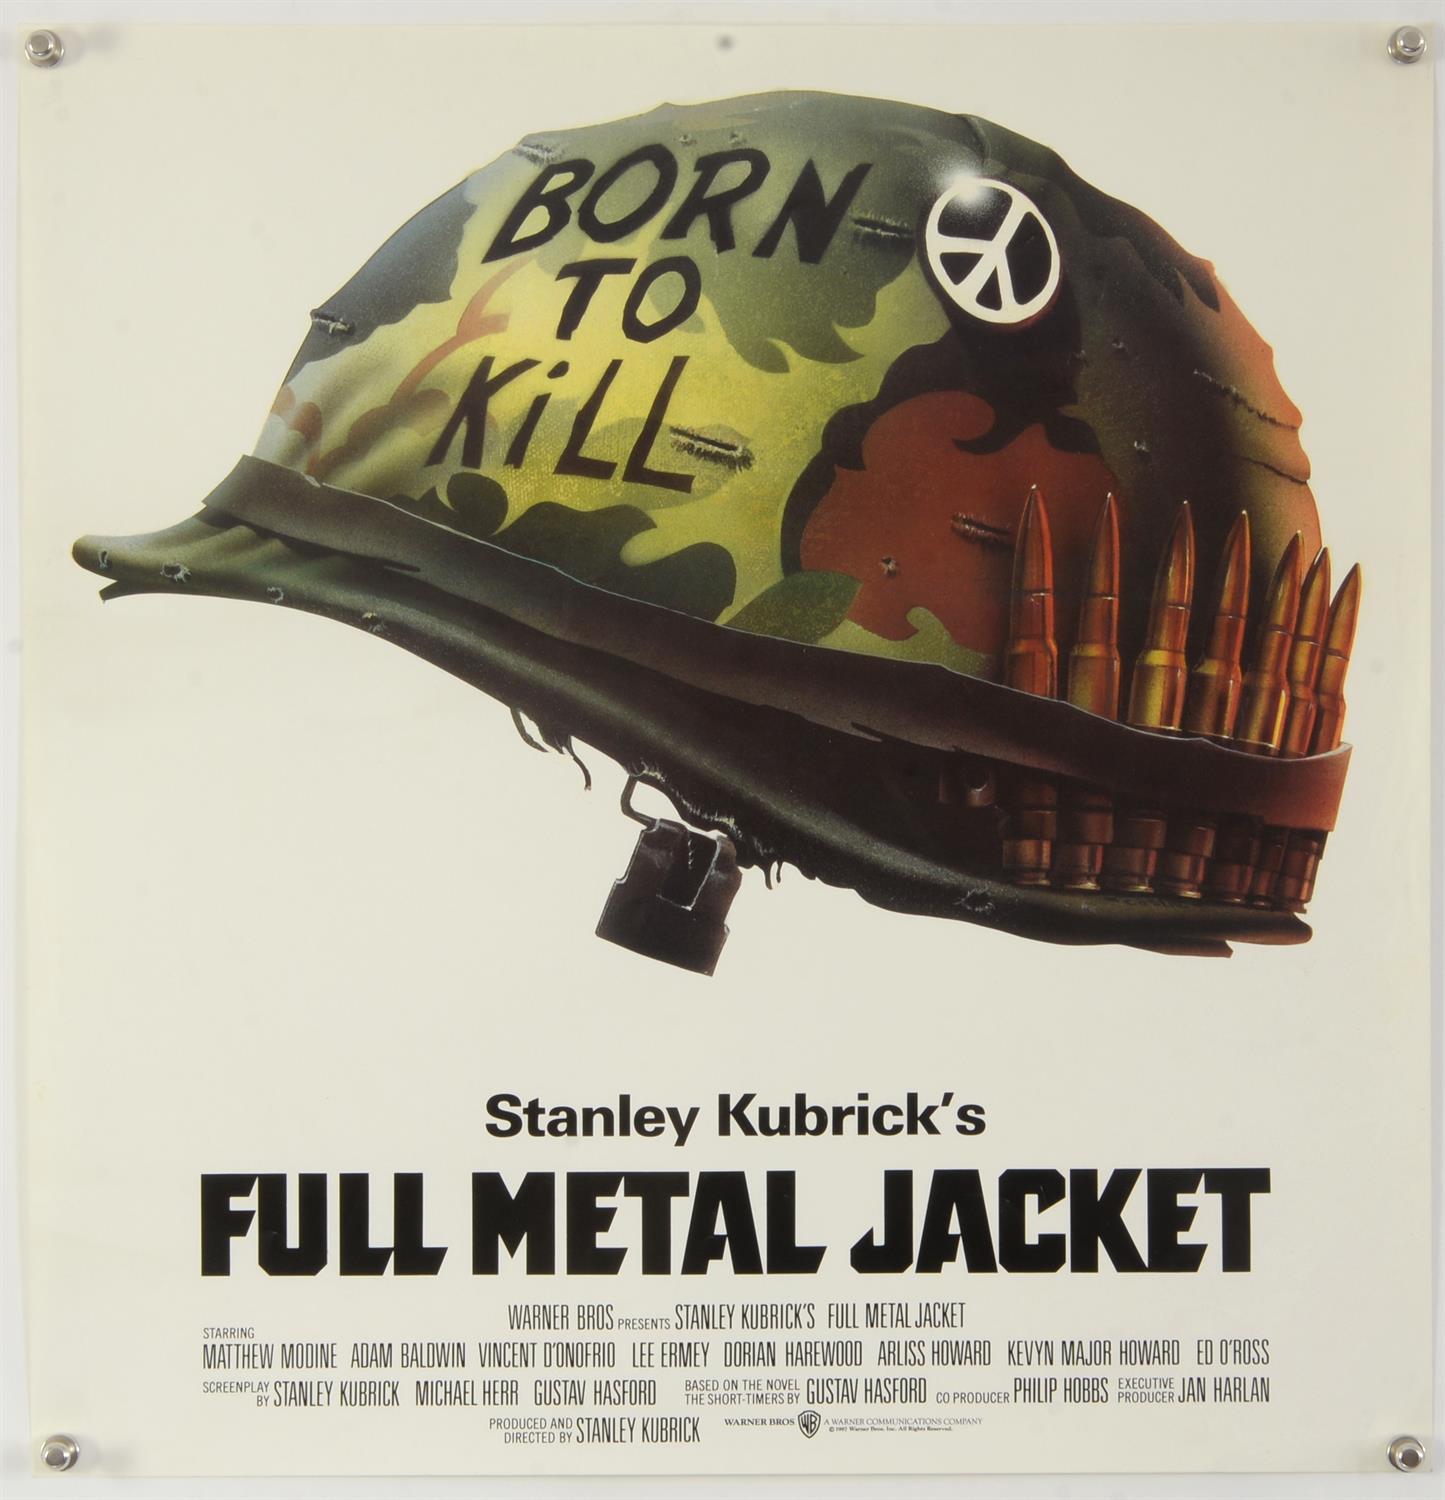 Full Metal Jacket (1987) unusual poster format for this Kubrick Vietnam War film,